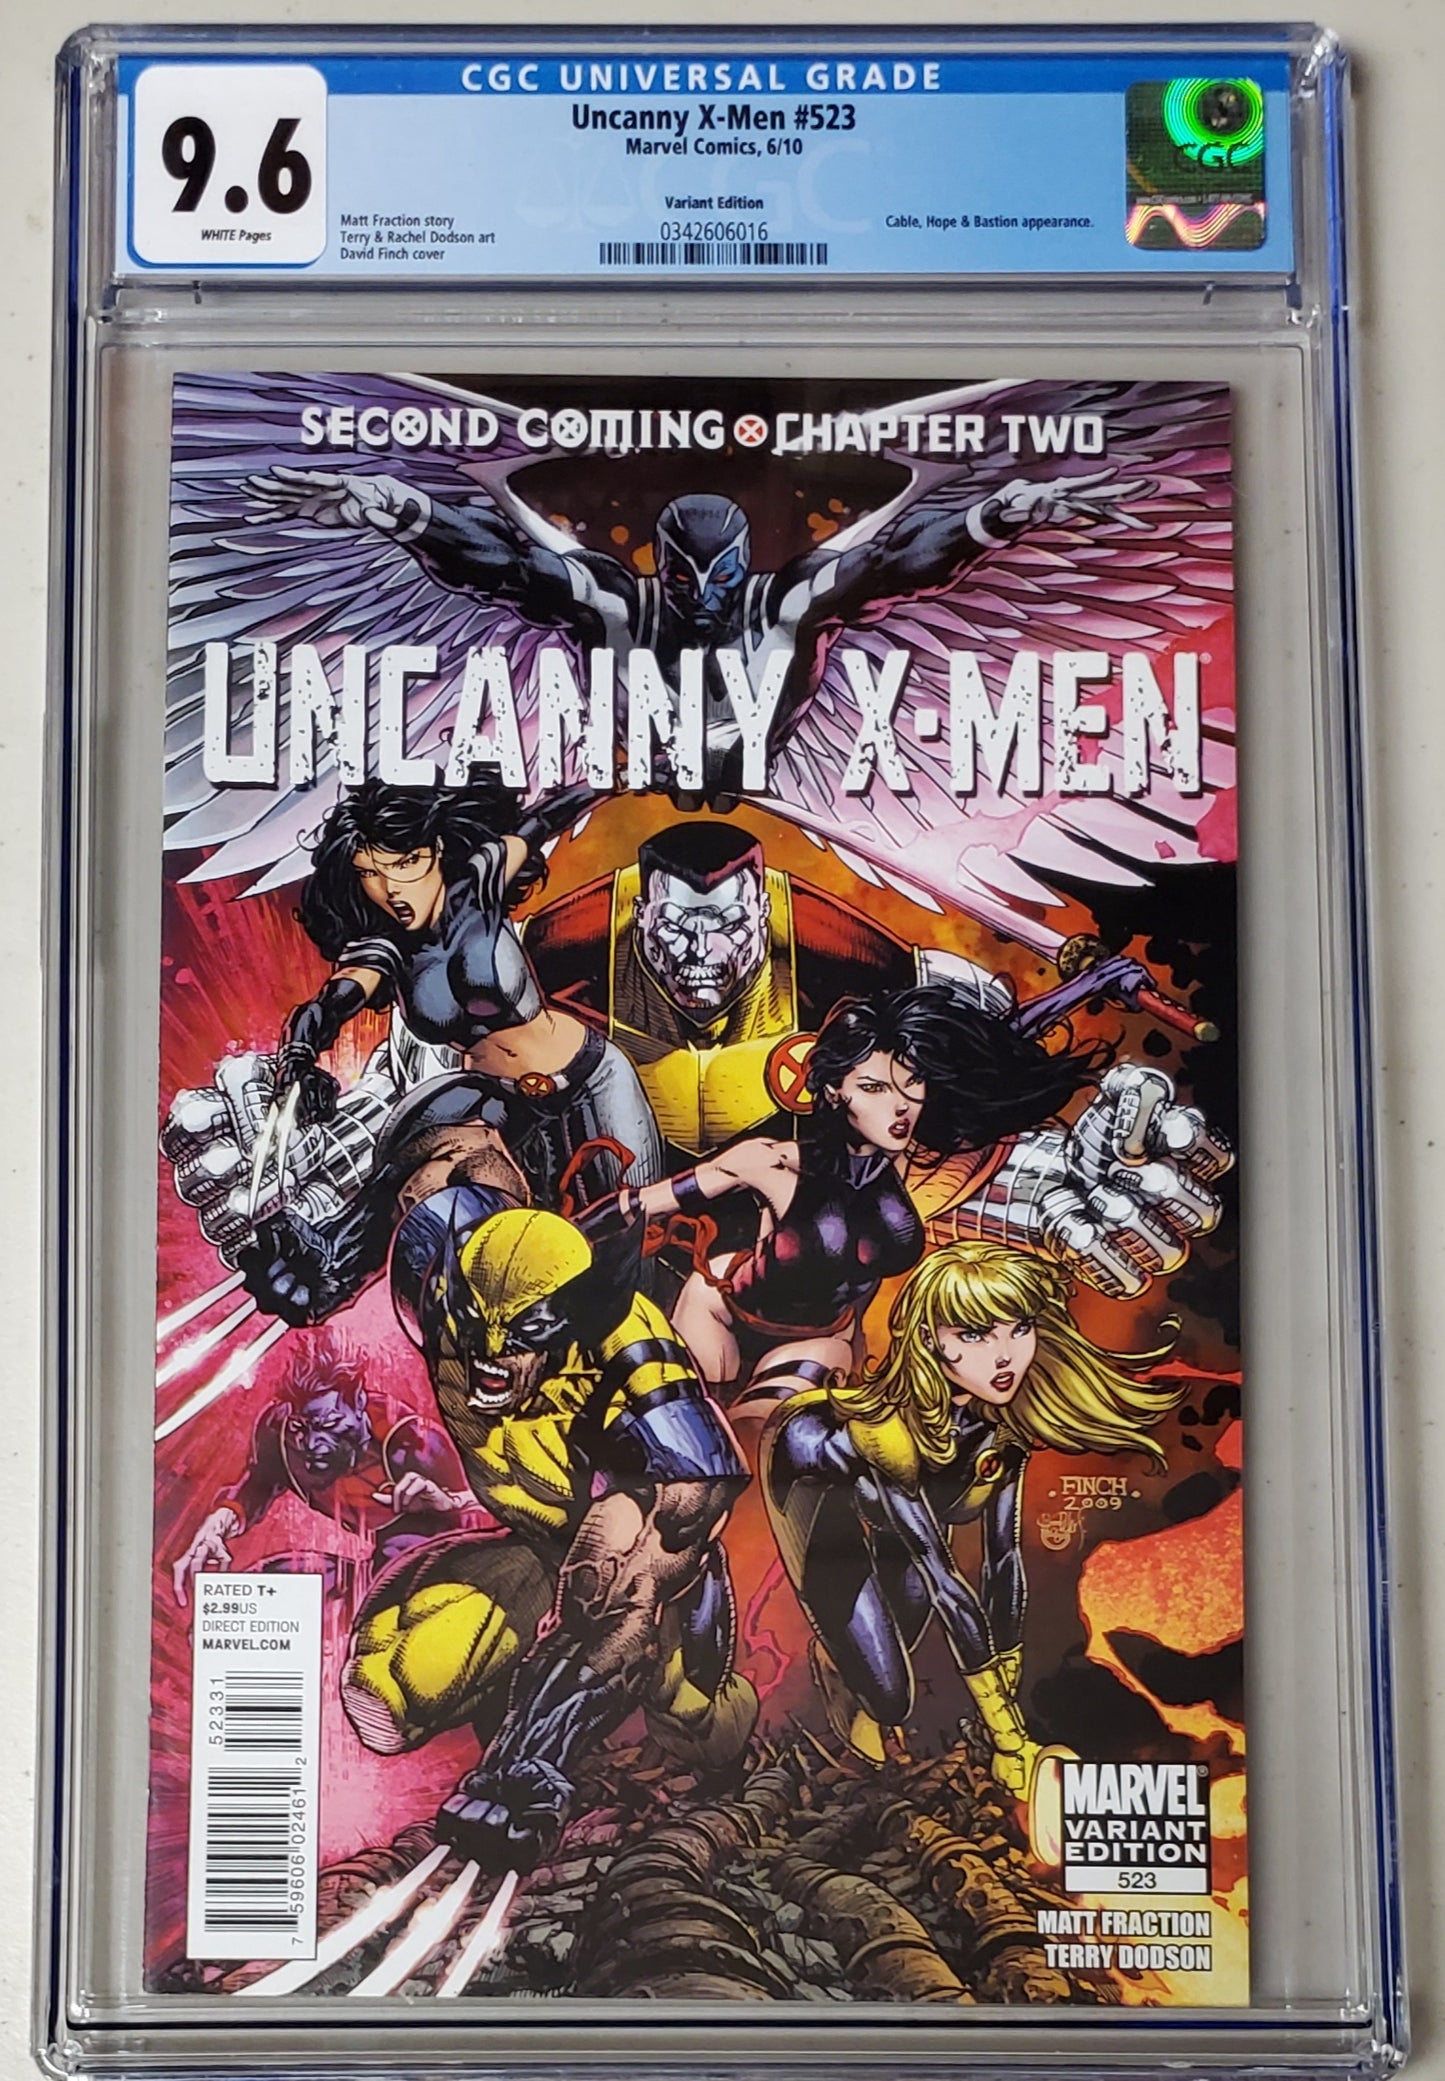 9.6 CGC Uncanny X-Men #523 1:25 Finch Variant 2010 [0342606016